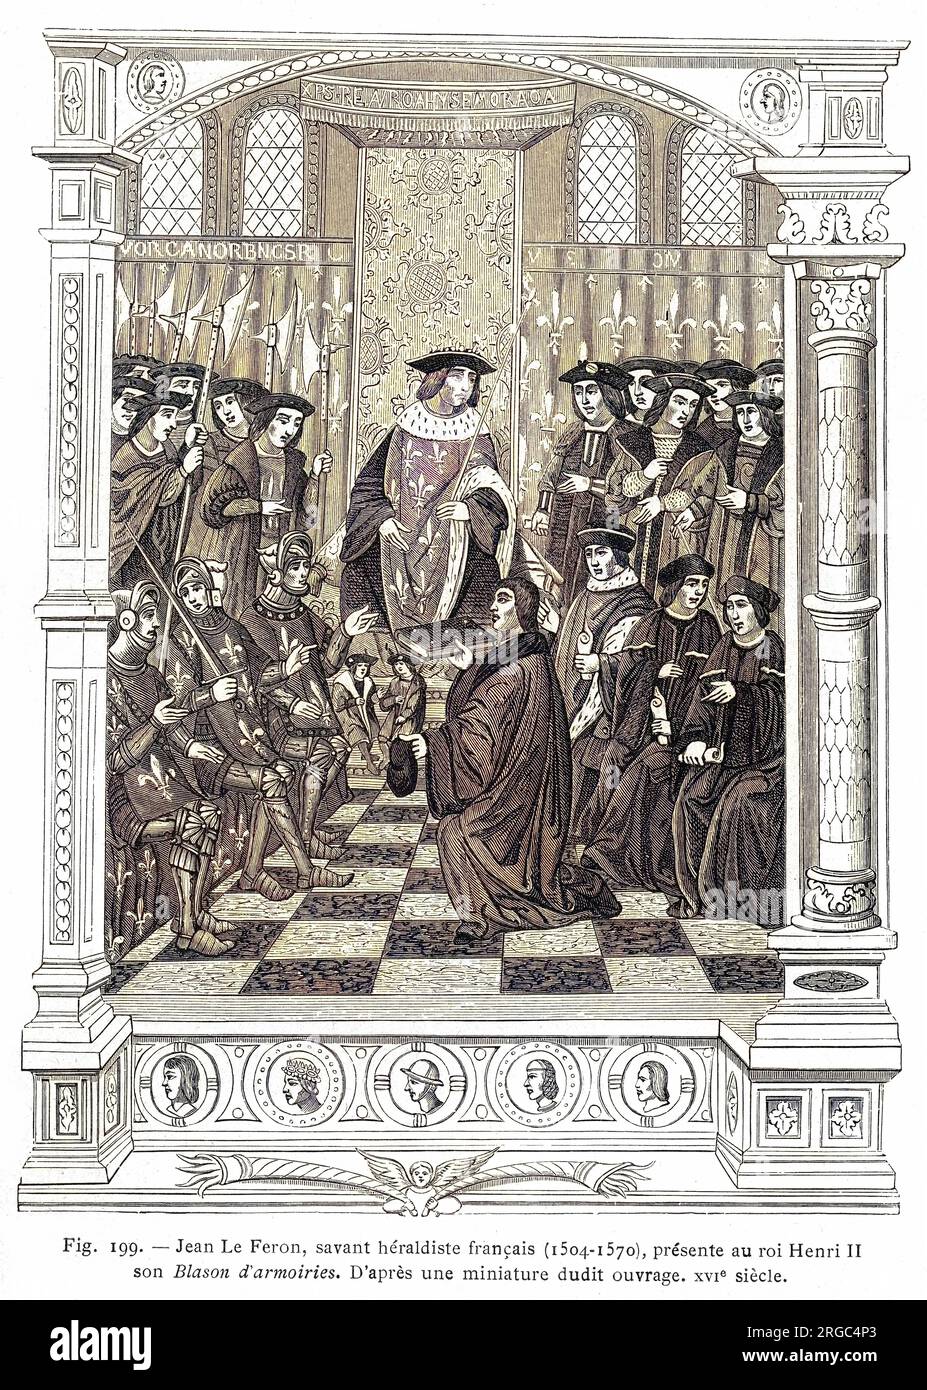 JEAN LE FERON French herald, depicted presenting his 'Blason d'armoiries' to king Henri II. Stock Photo